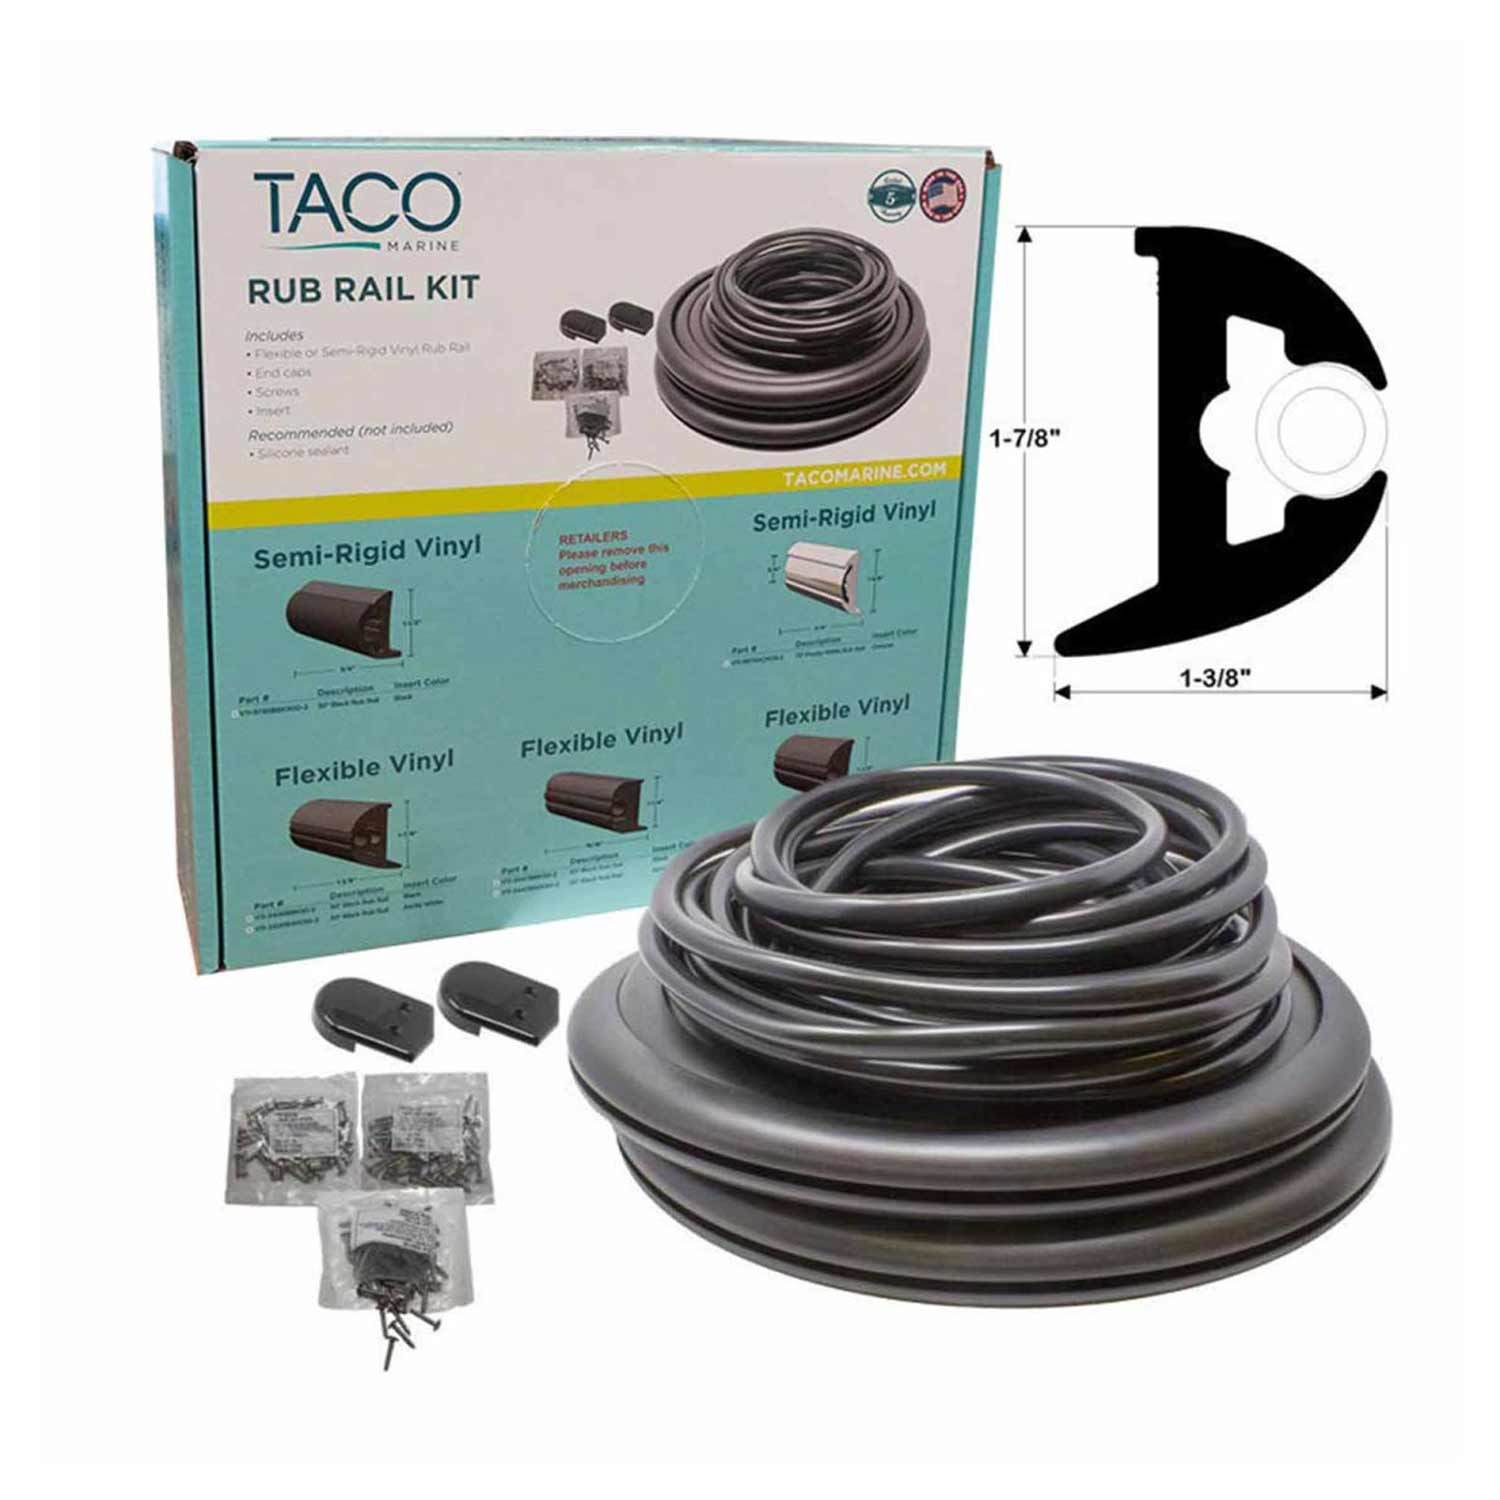 TACO MARINE Flexible Vinyl Rub Rail Replacement Kits with Inserts